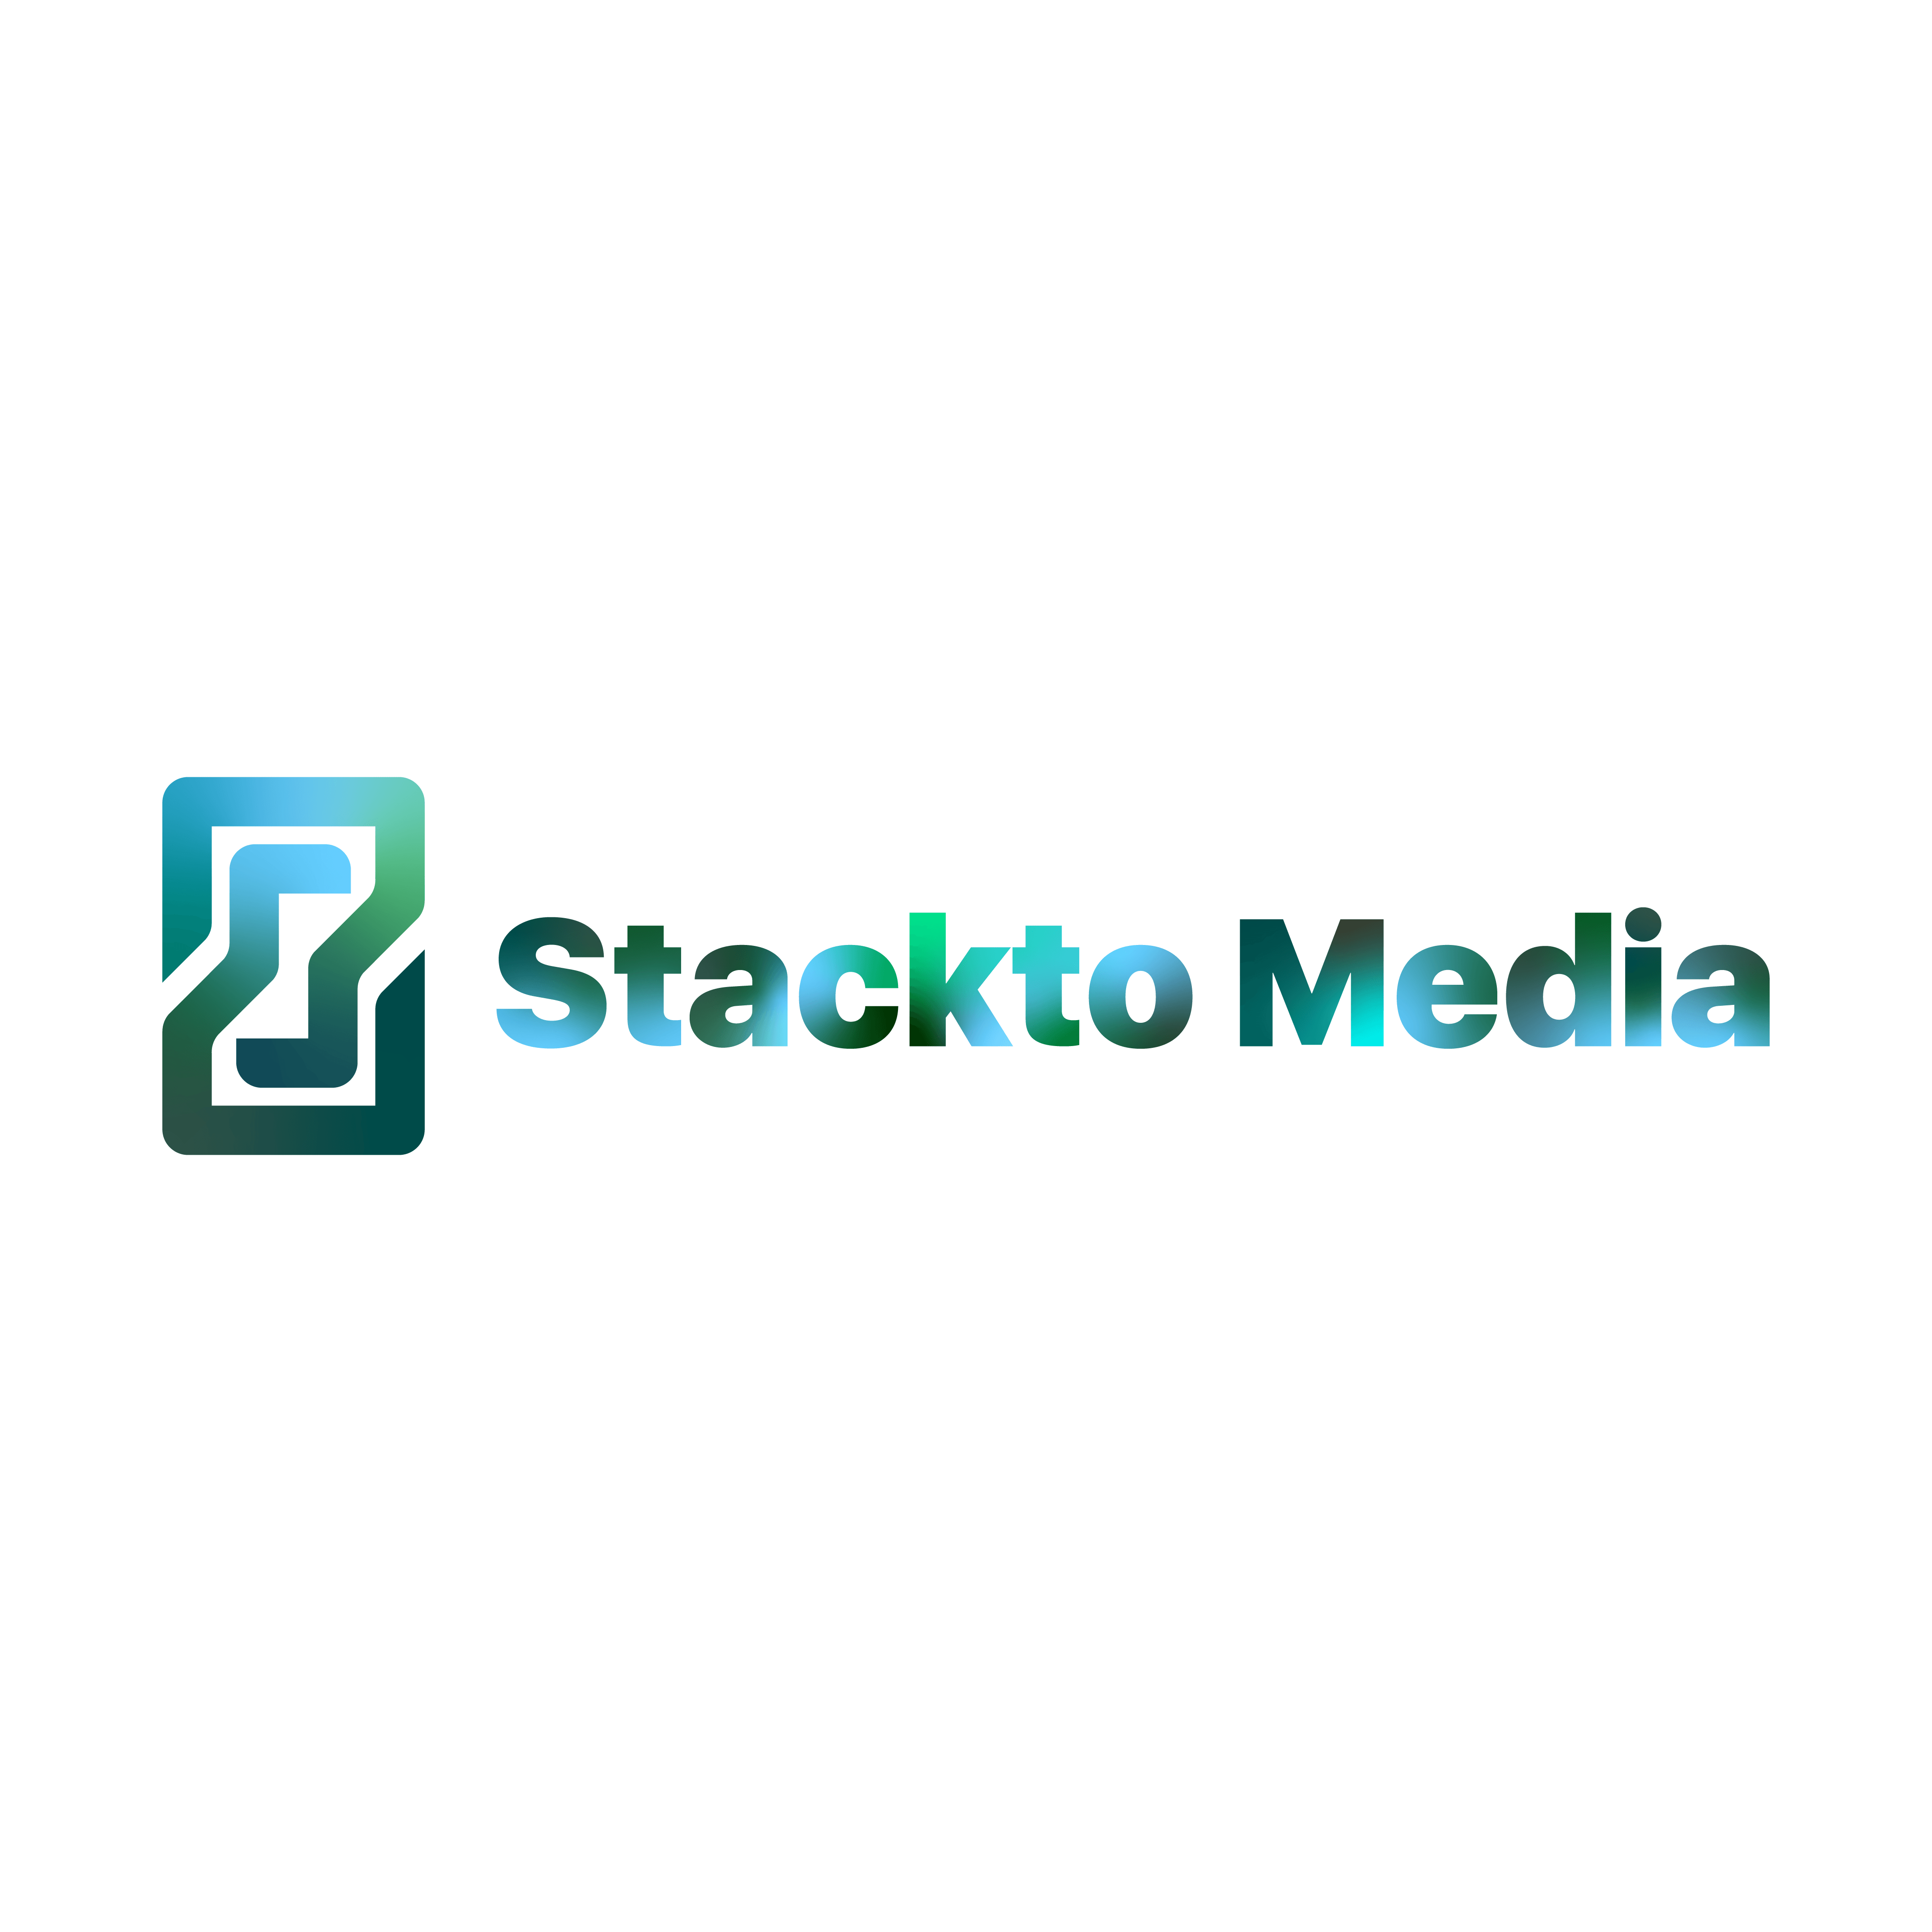 Stackto Media